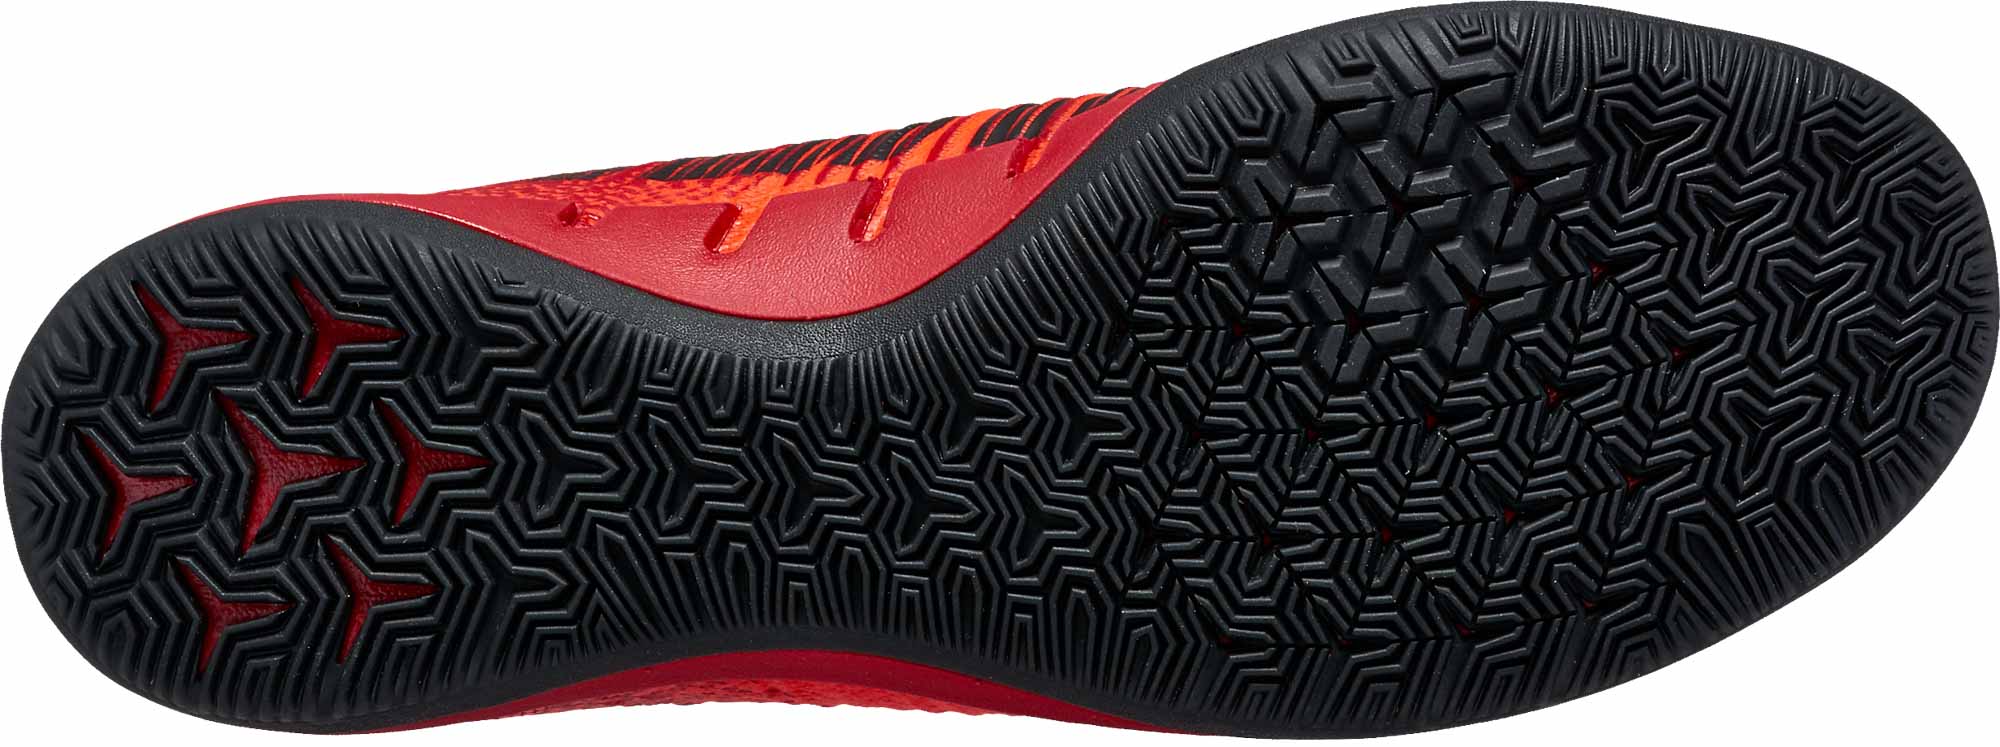 Nike Kids MercurialX Proximo II IC - Red Indoor Shoes